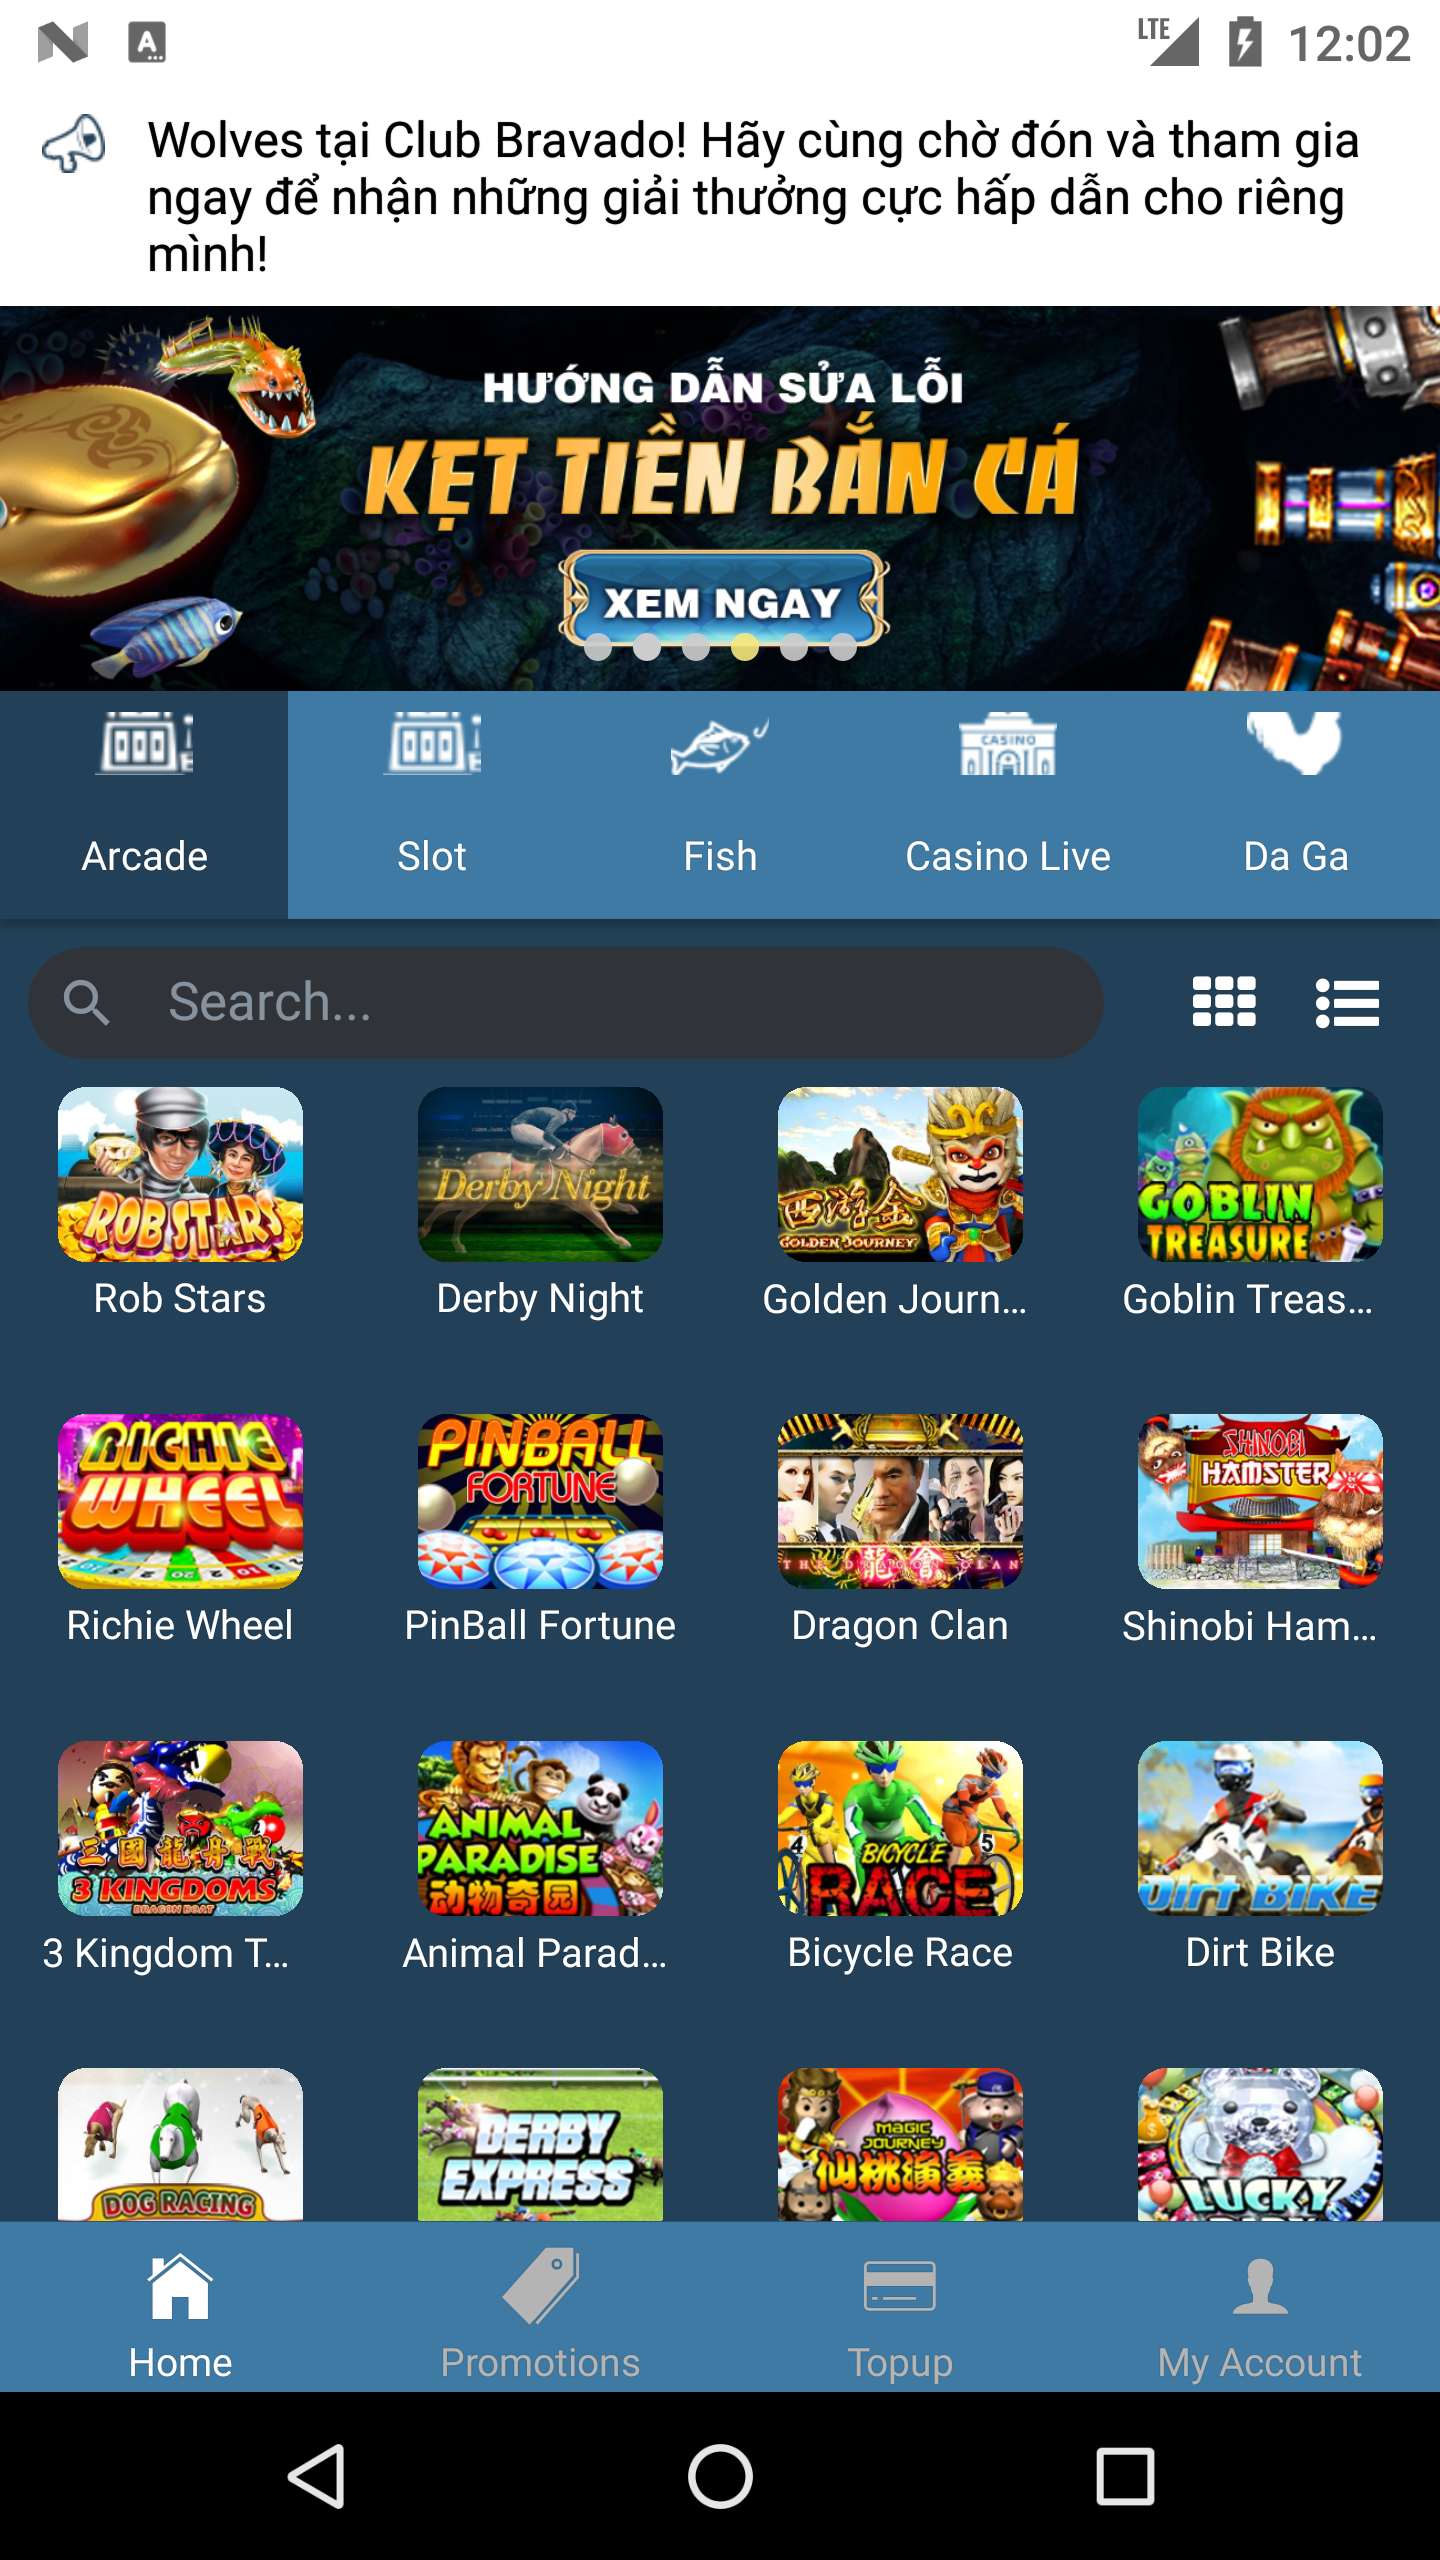 Online Mobile Gaming Portal